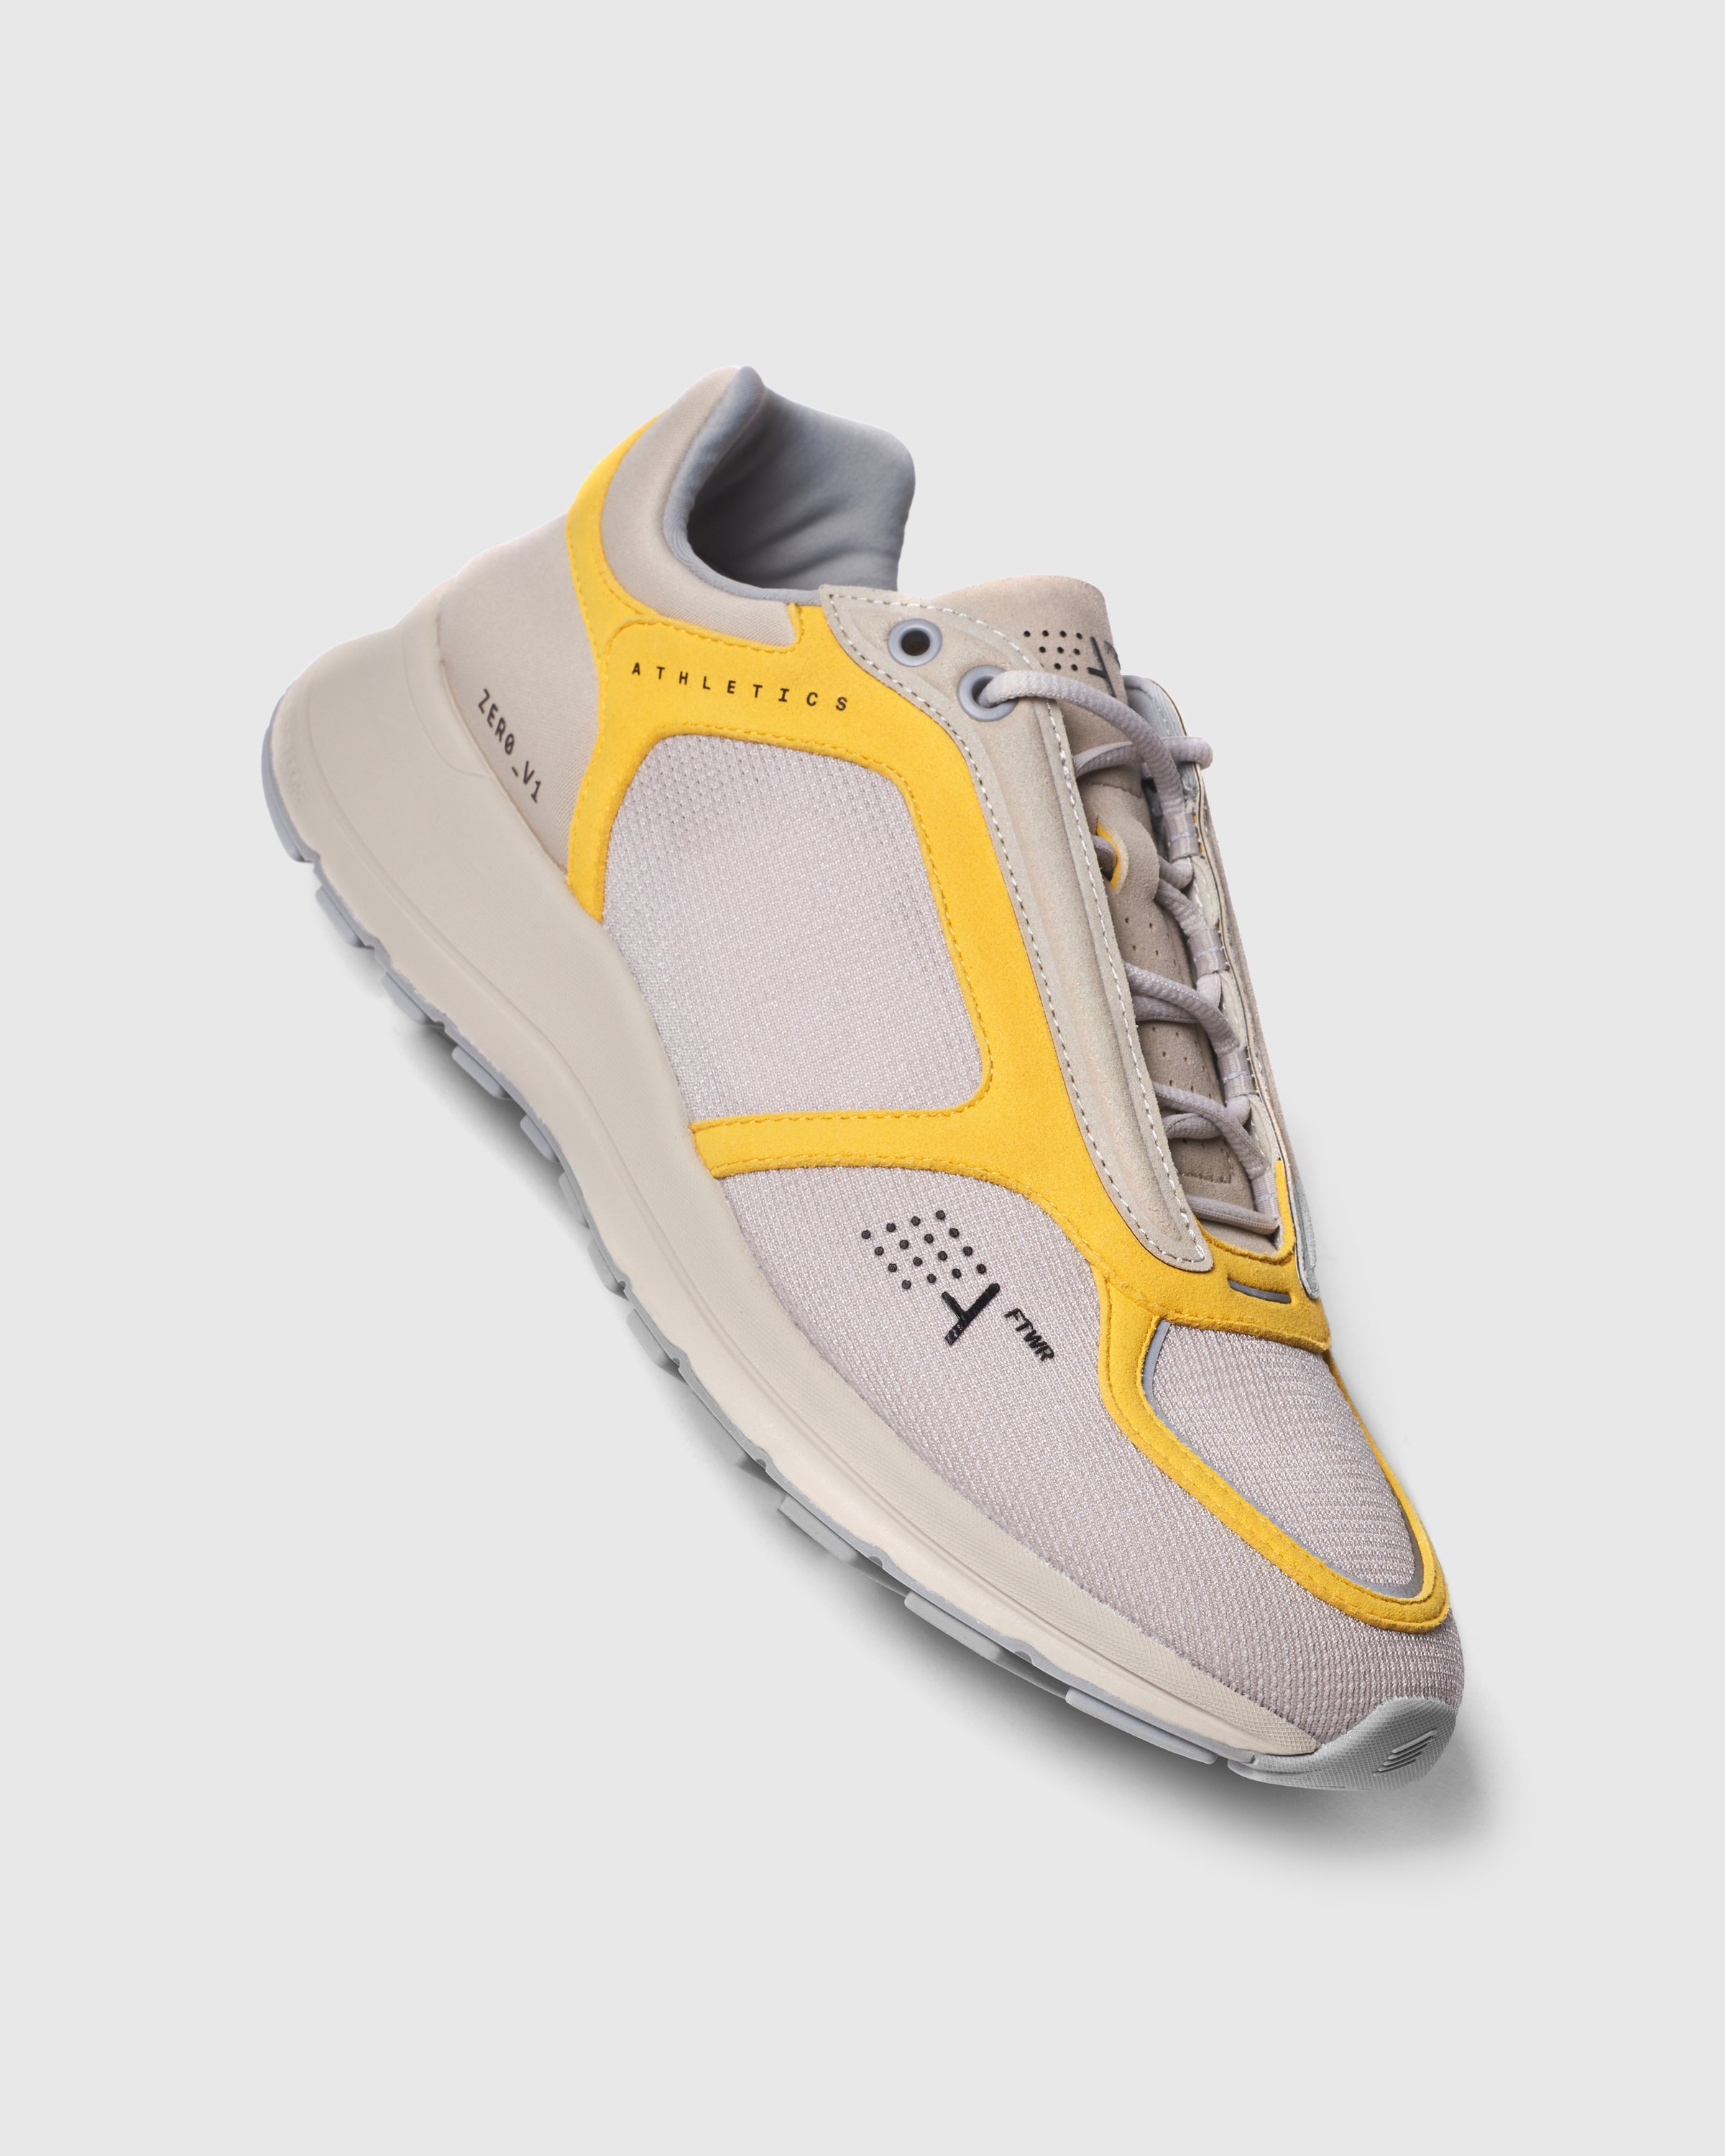 Athletics Footwear - Zero V1 Silver - Footwear - Multi - Image 2